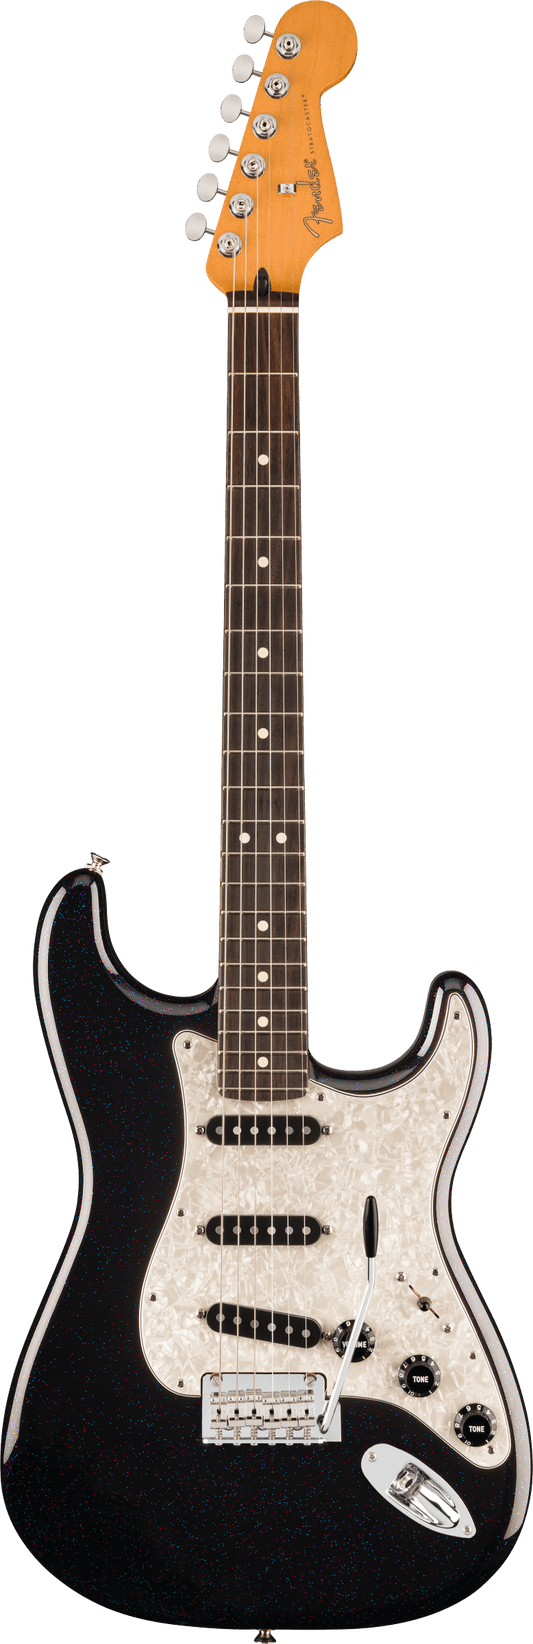 70th Anniversary Nebula Noir Stratocaster